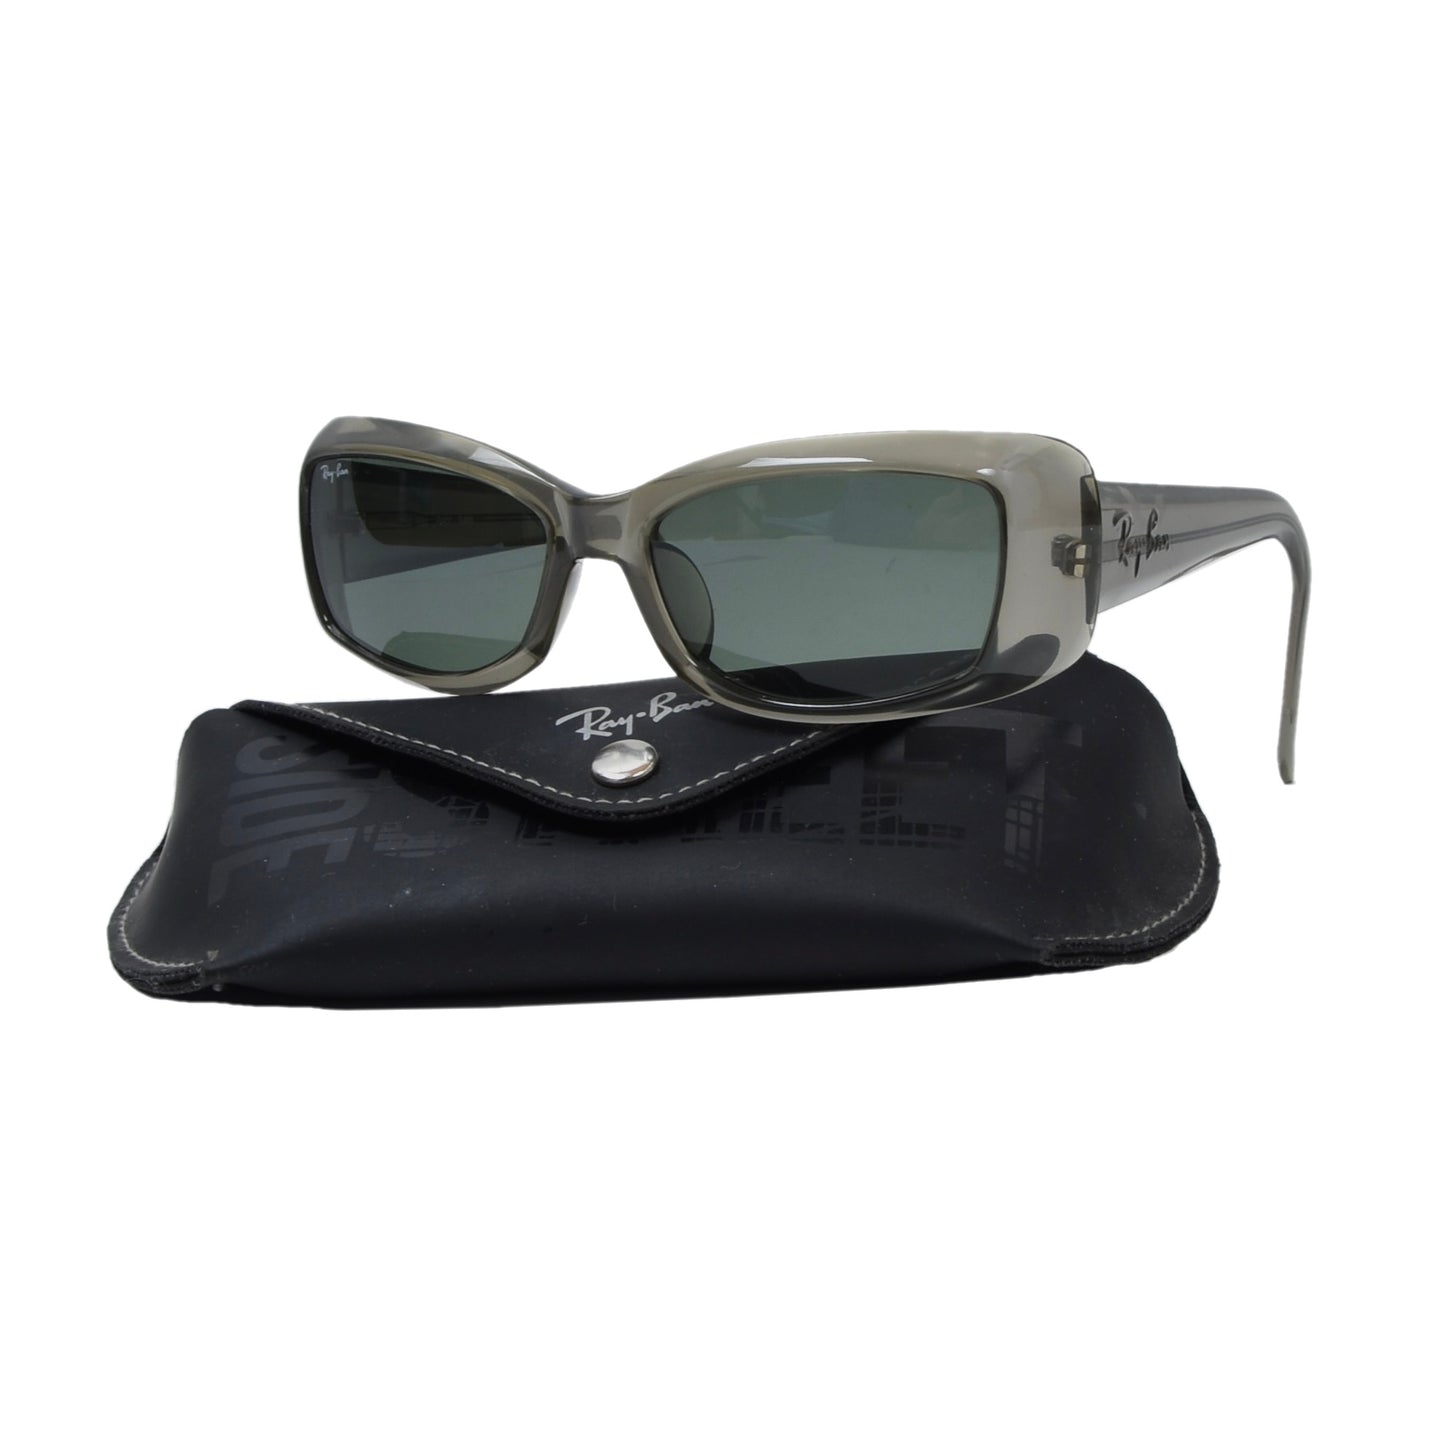 B&L Ray-Ban SideStreet W2636 Sunglasses - Grey